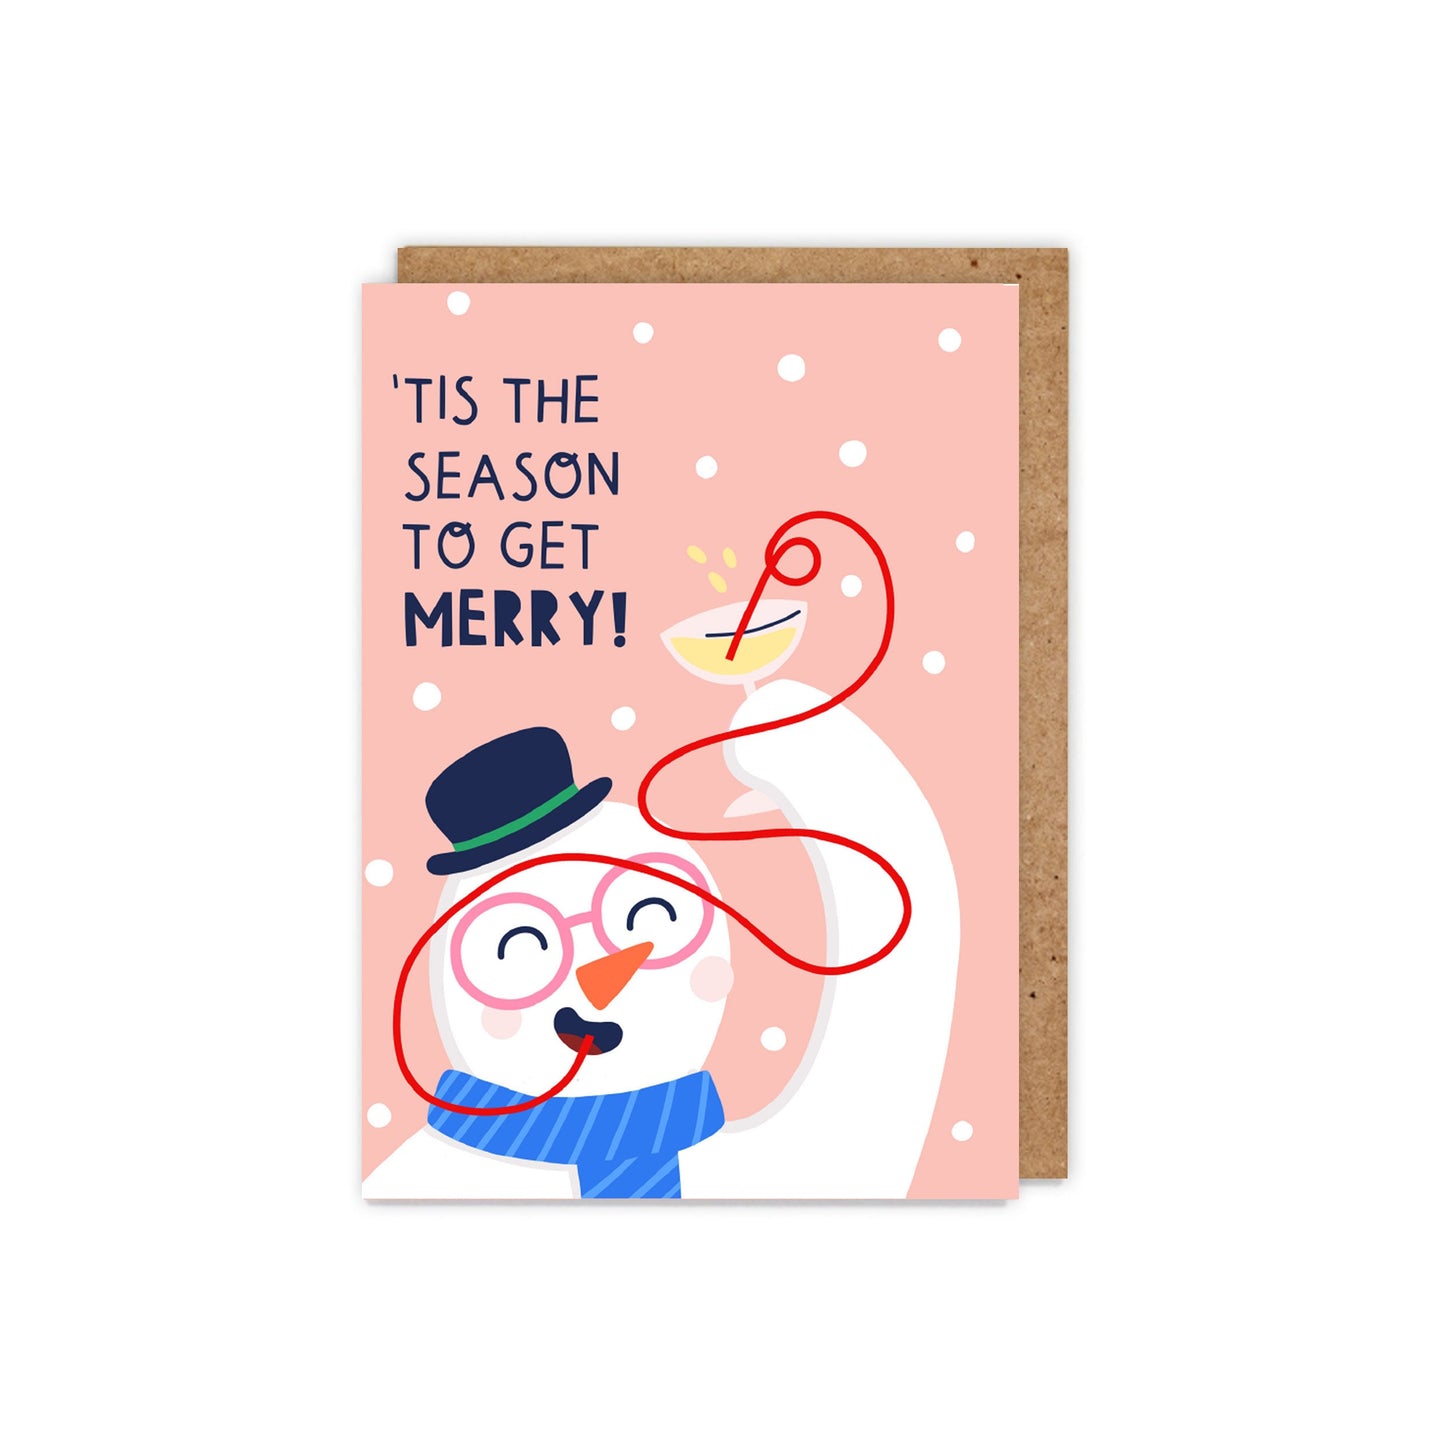 Tis the season to get merry!' Christmas Card